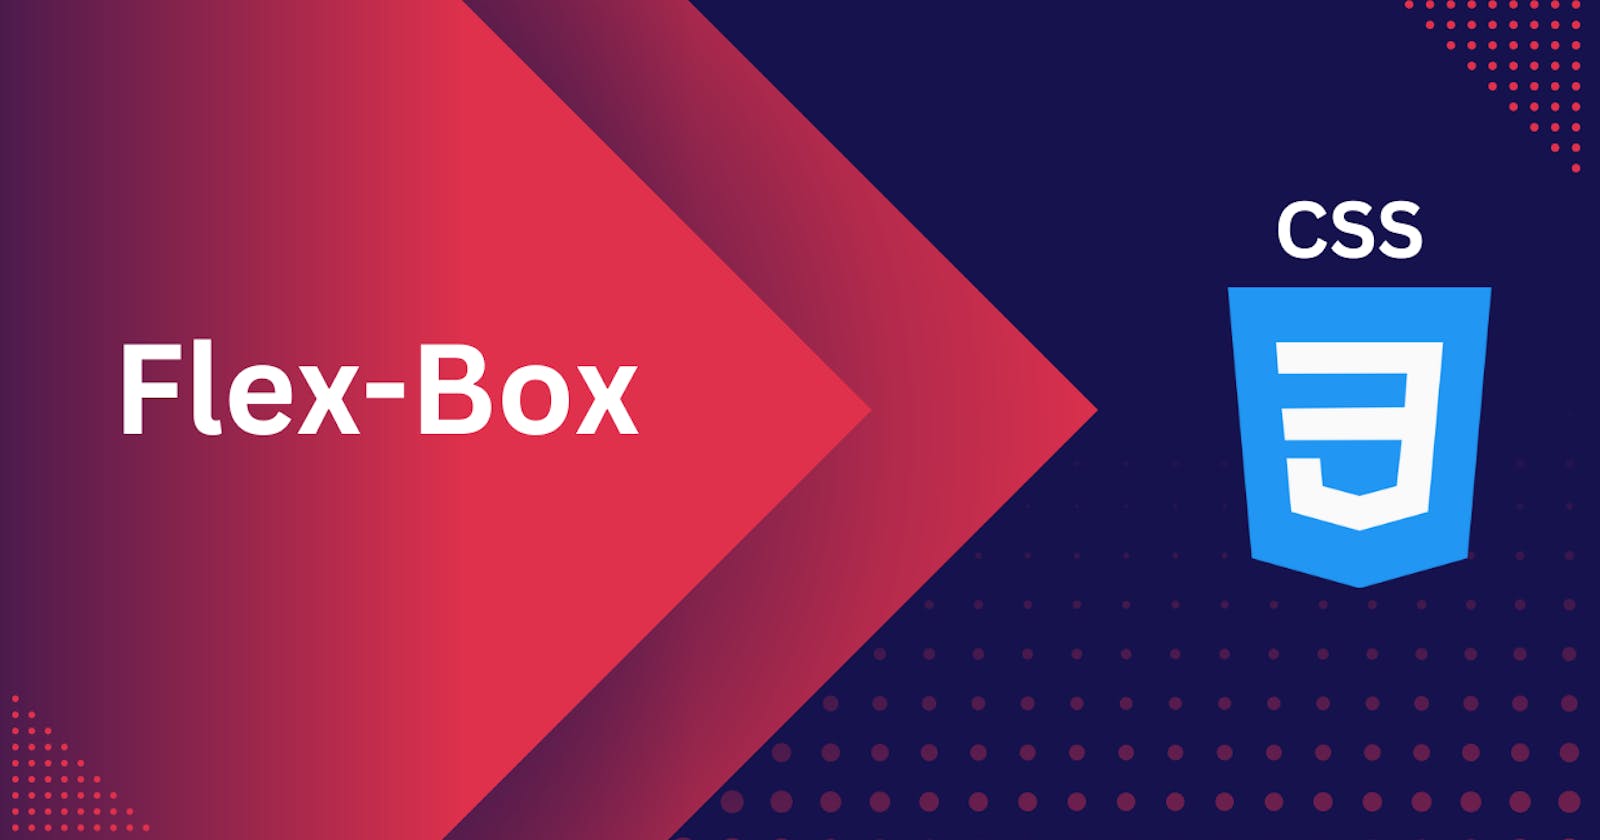 Flexbox in CSS